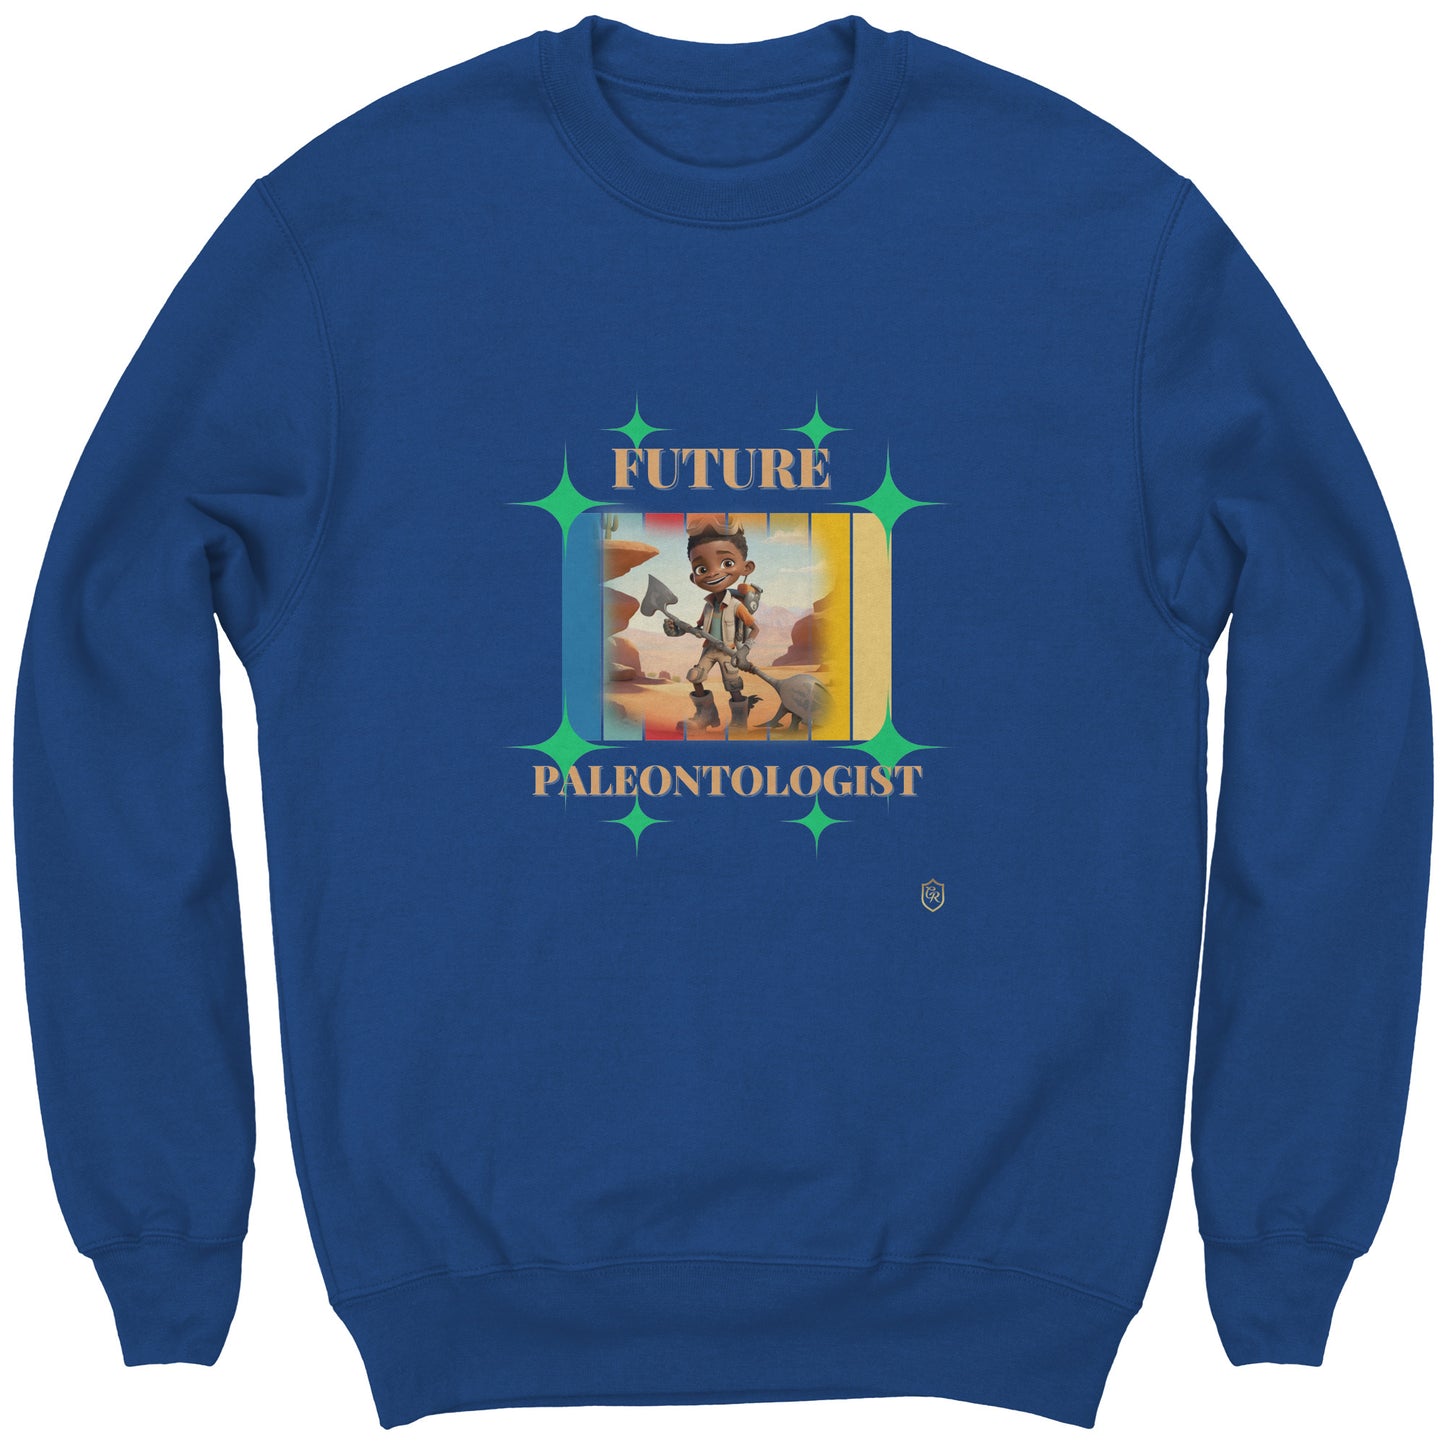 Young Boy's Future Paleontologist Sweatshirt